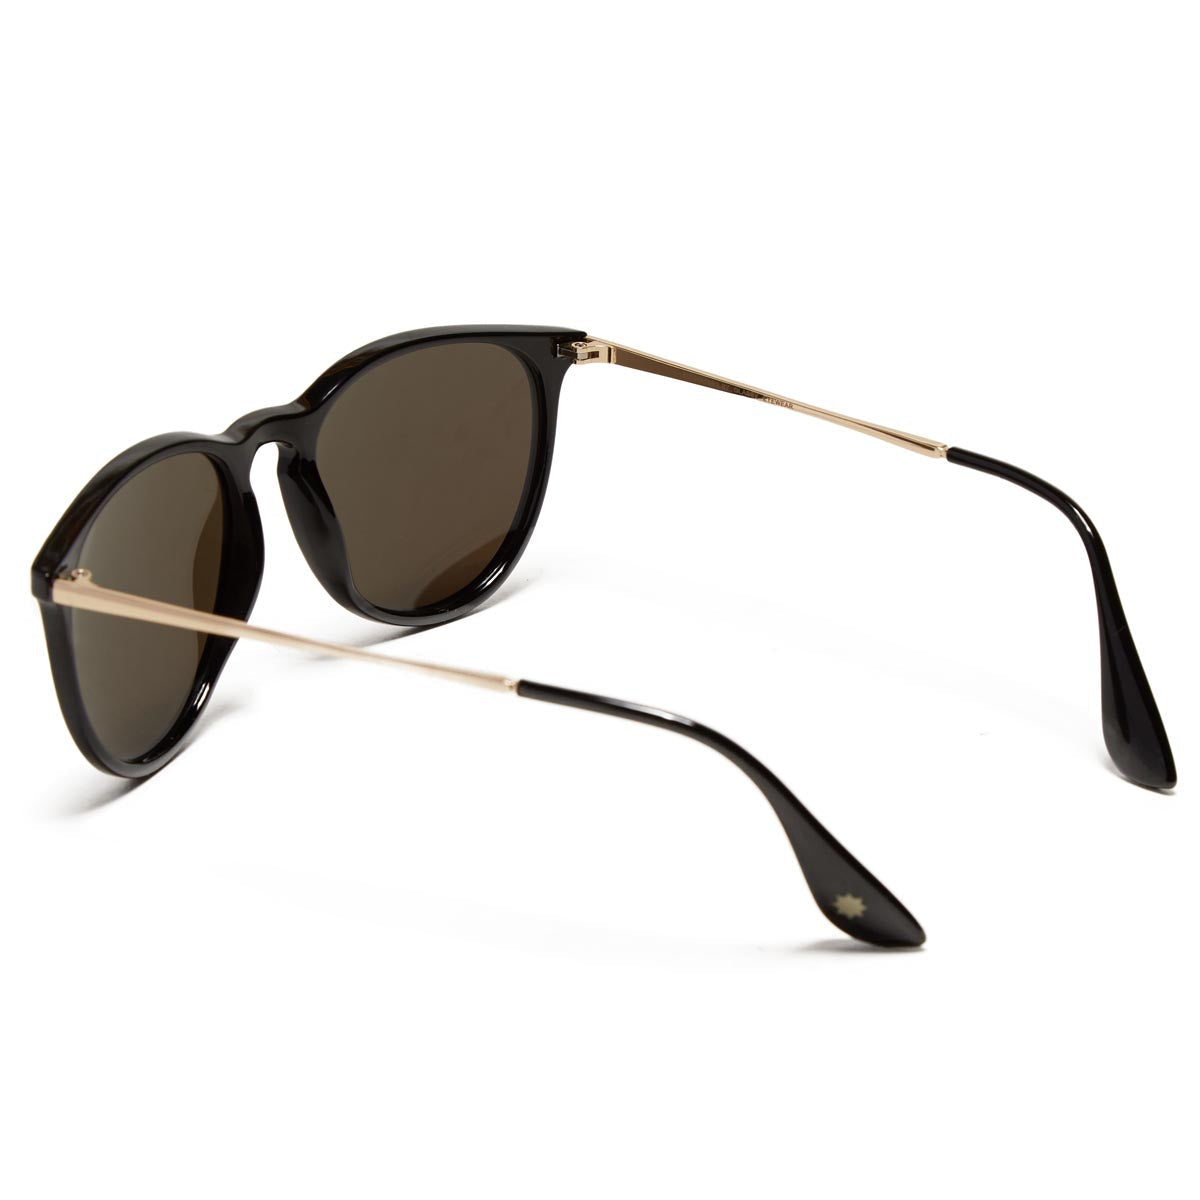 Glassy Sierra Polarized Sunglasses - Black/Gold/Blue Mirror image 2